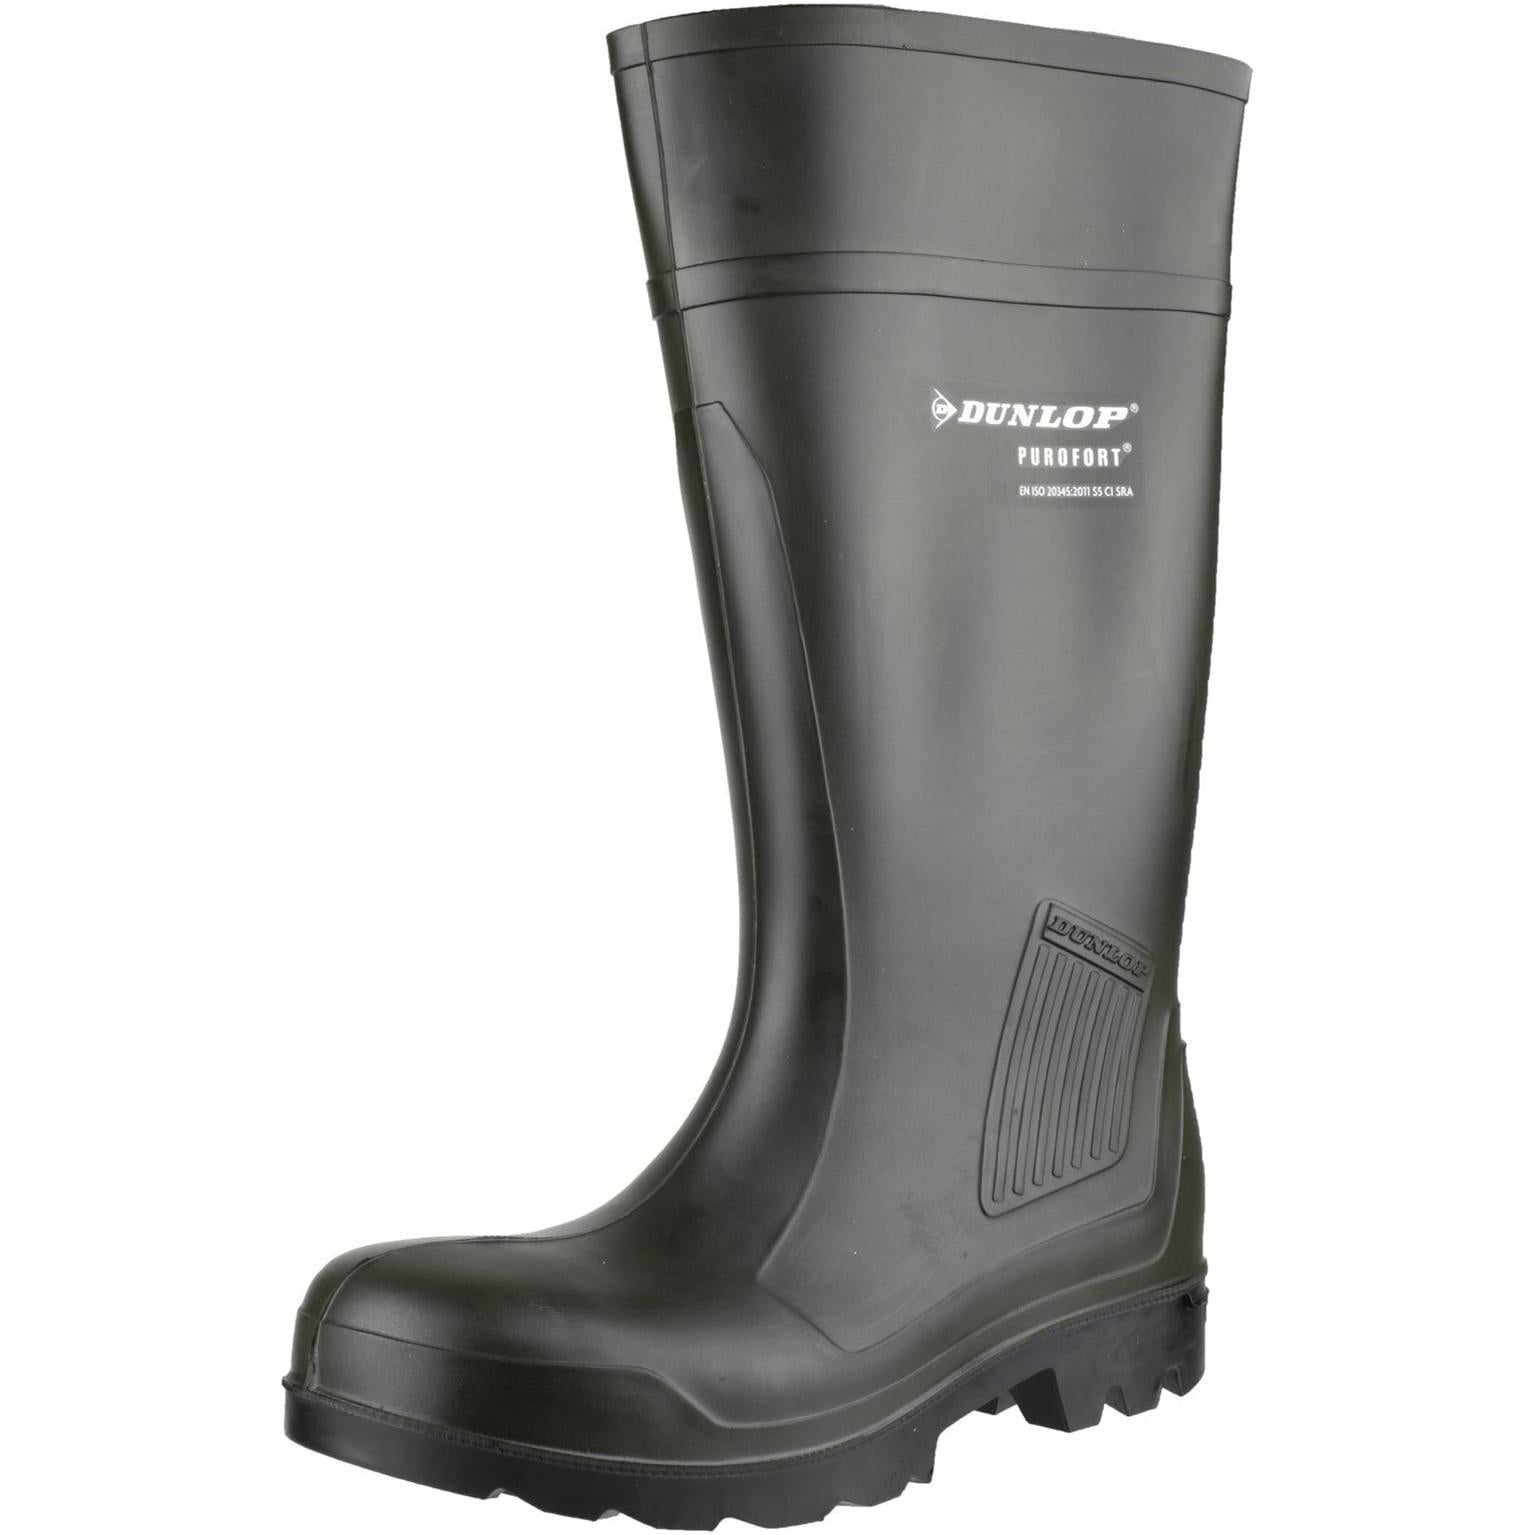 Dunlop Purofort��Professional Full Safety Wellington Boots